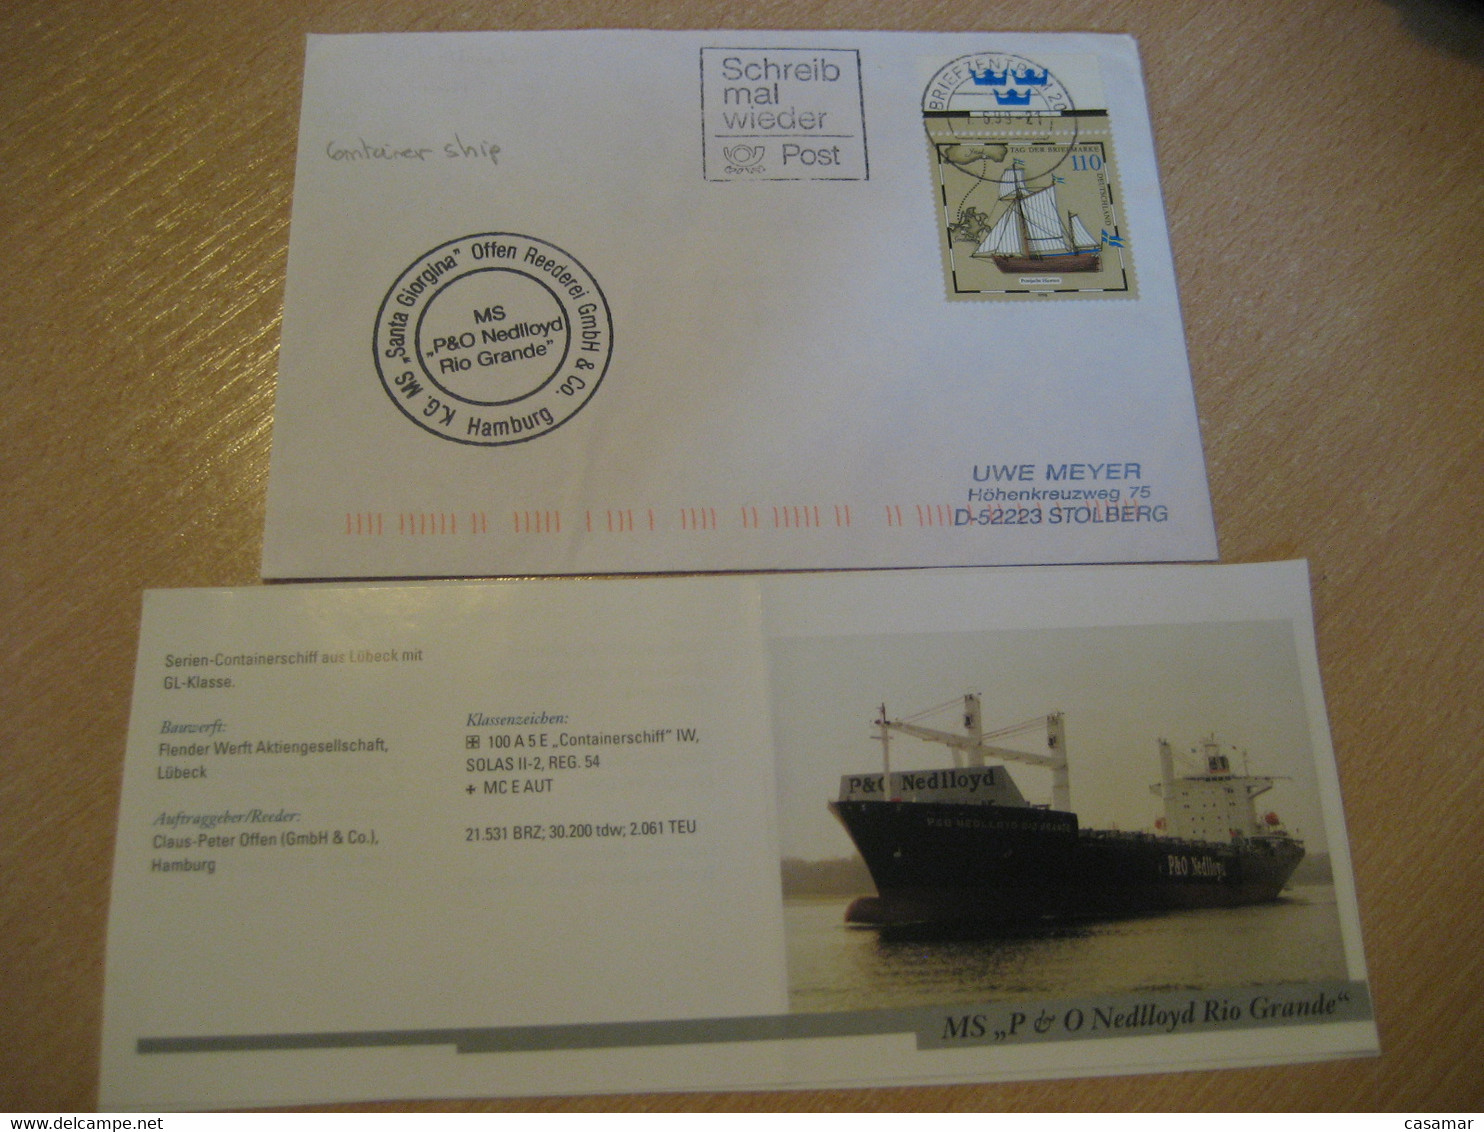 NEDLLOYD RIO GRANDE P&O MS Container Ship Cover Hamburg Santa Giorgina MS 1999 Cancel GERMANY + Image - Ships